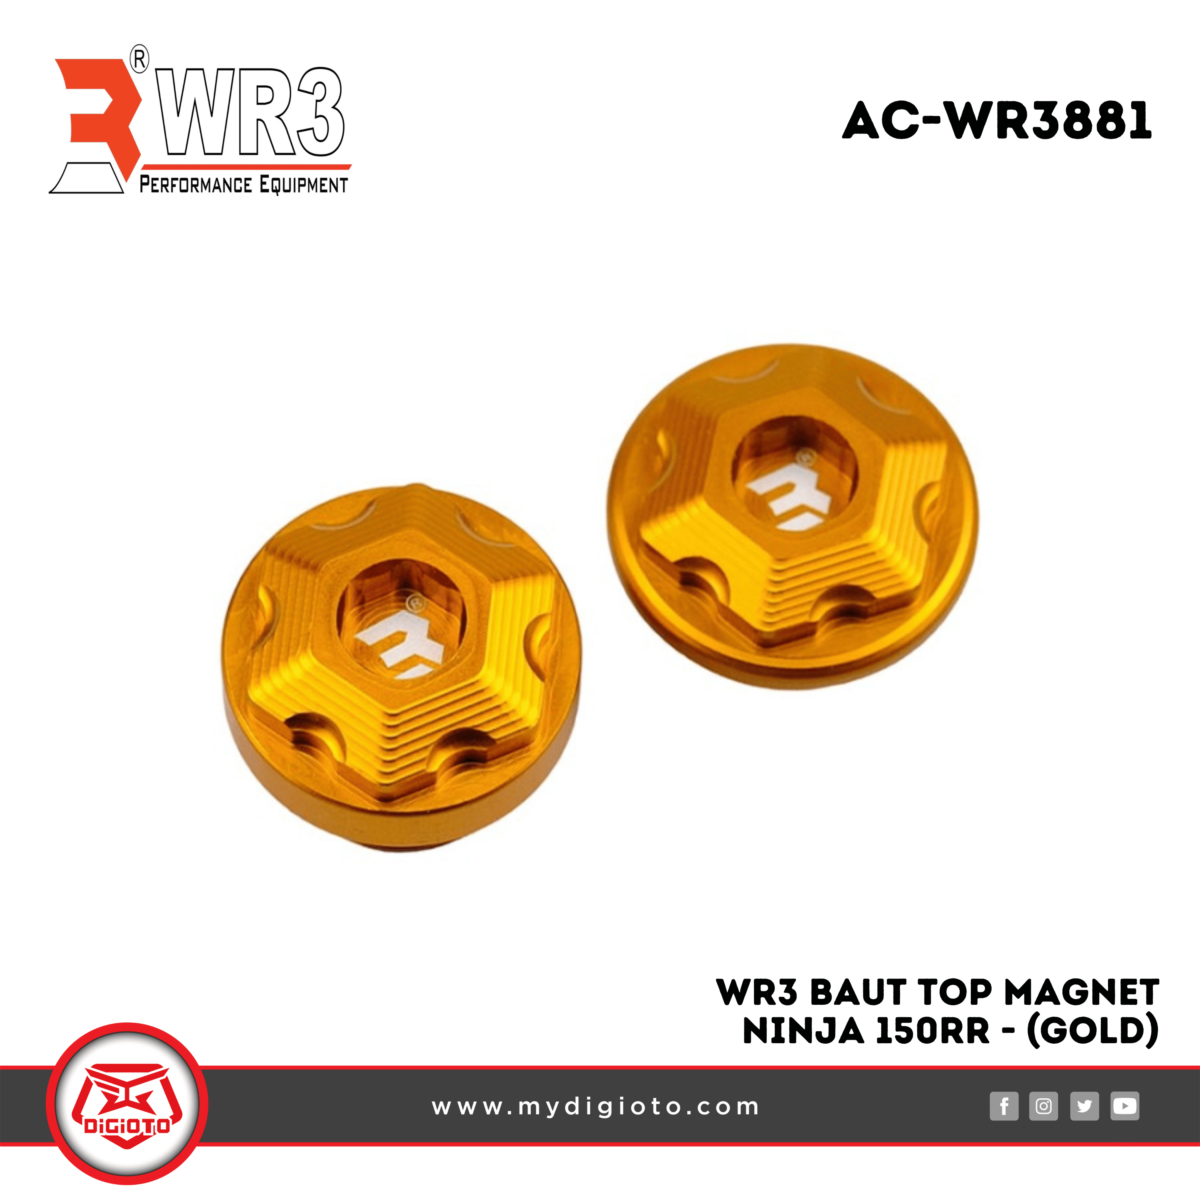 WR3 Baut Top Magnet Ninja 150RR - Gold